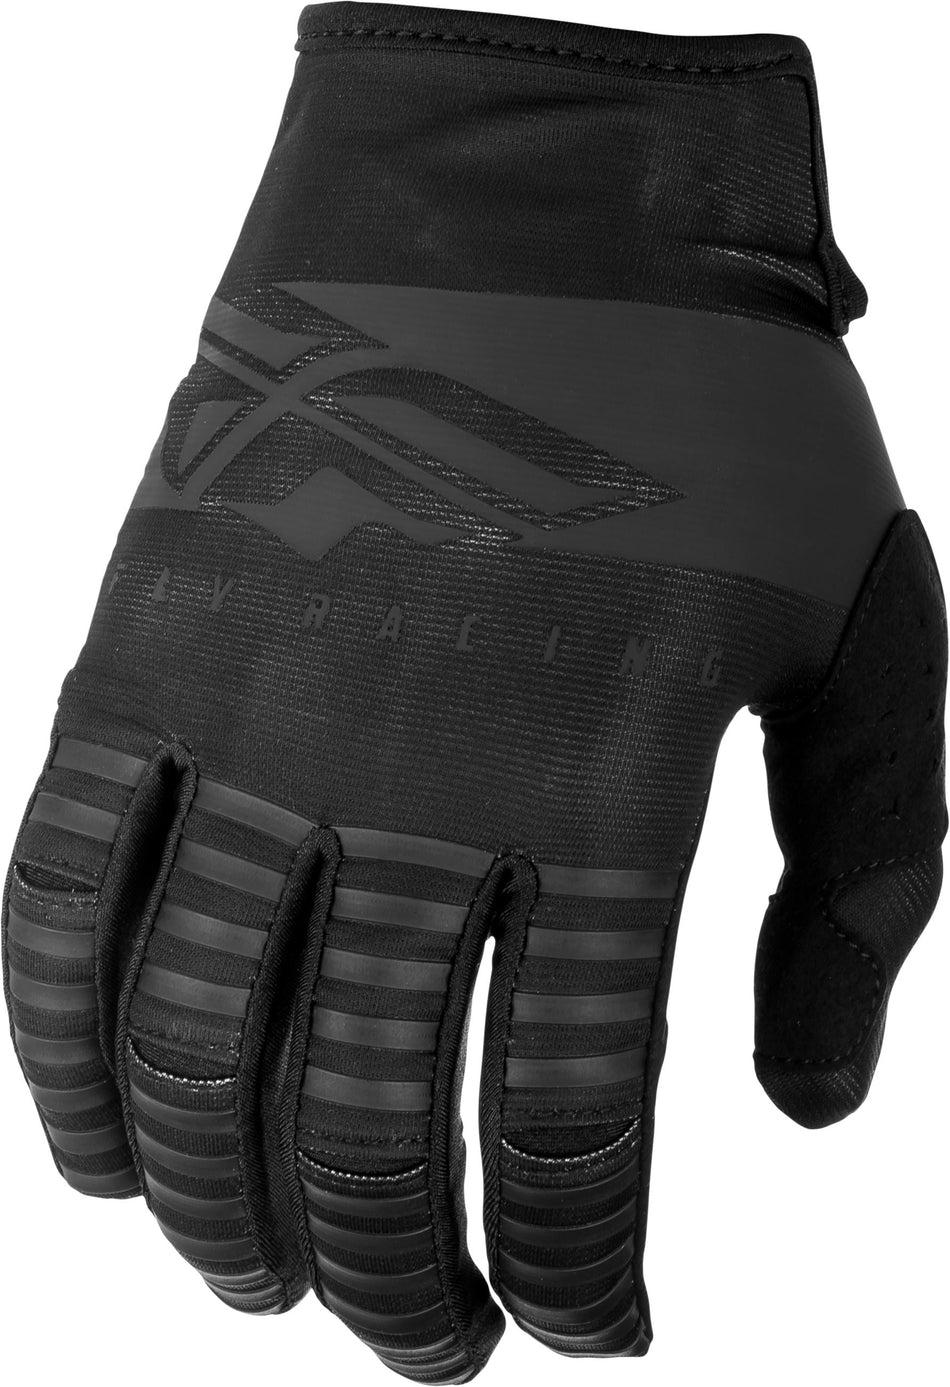 FLY RACING Kinetic Shield Gloves Black Sz 13 372-41013